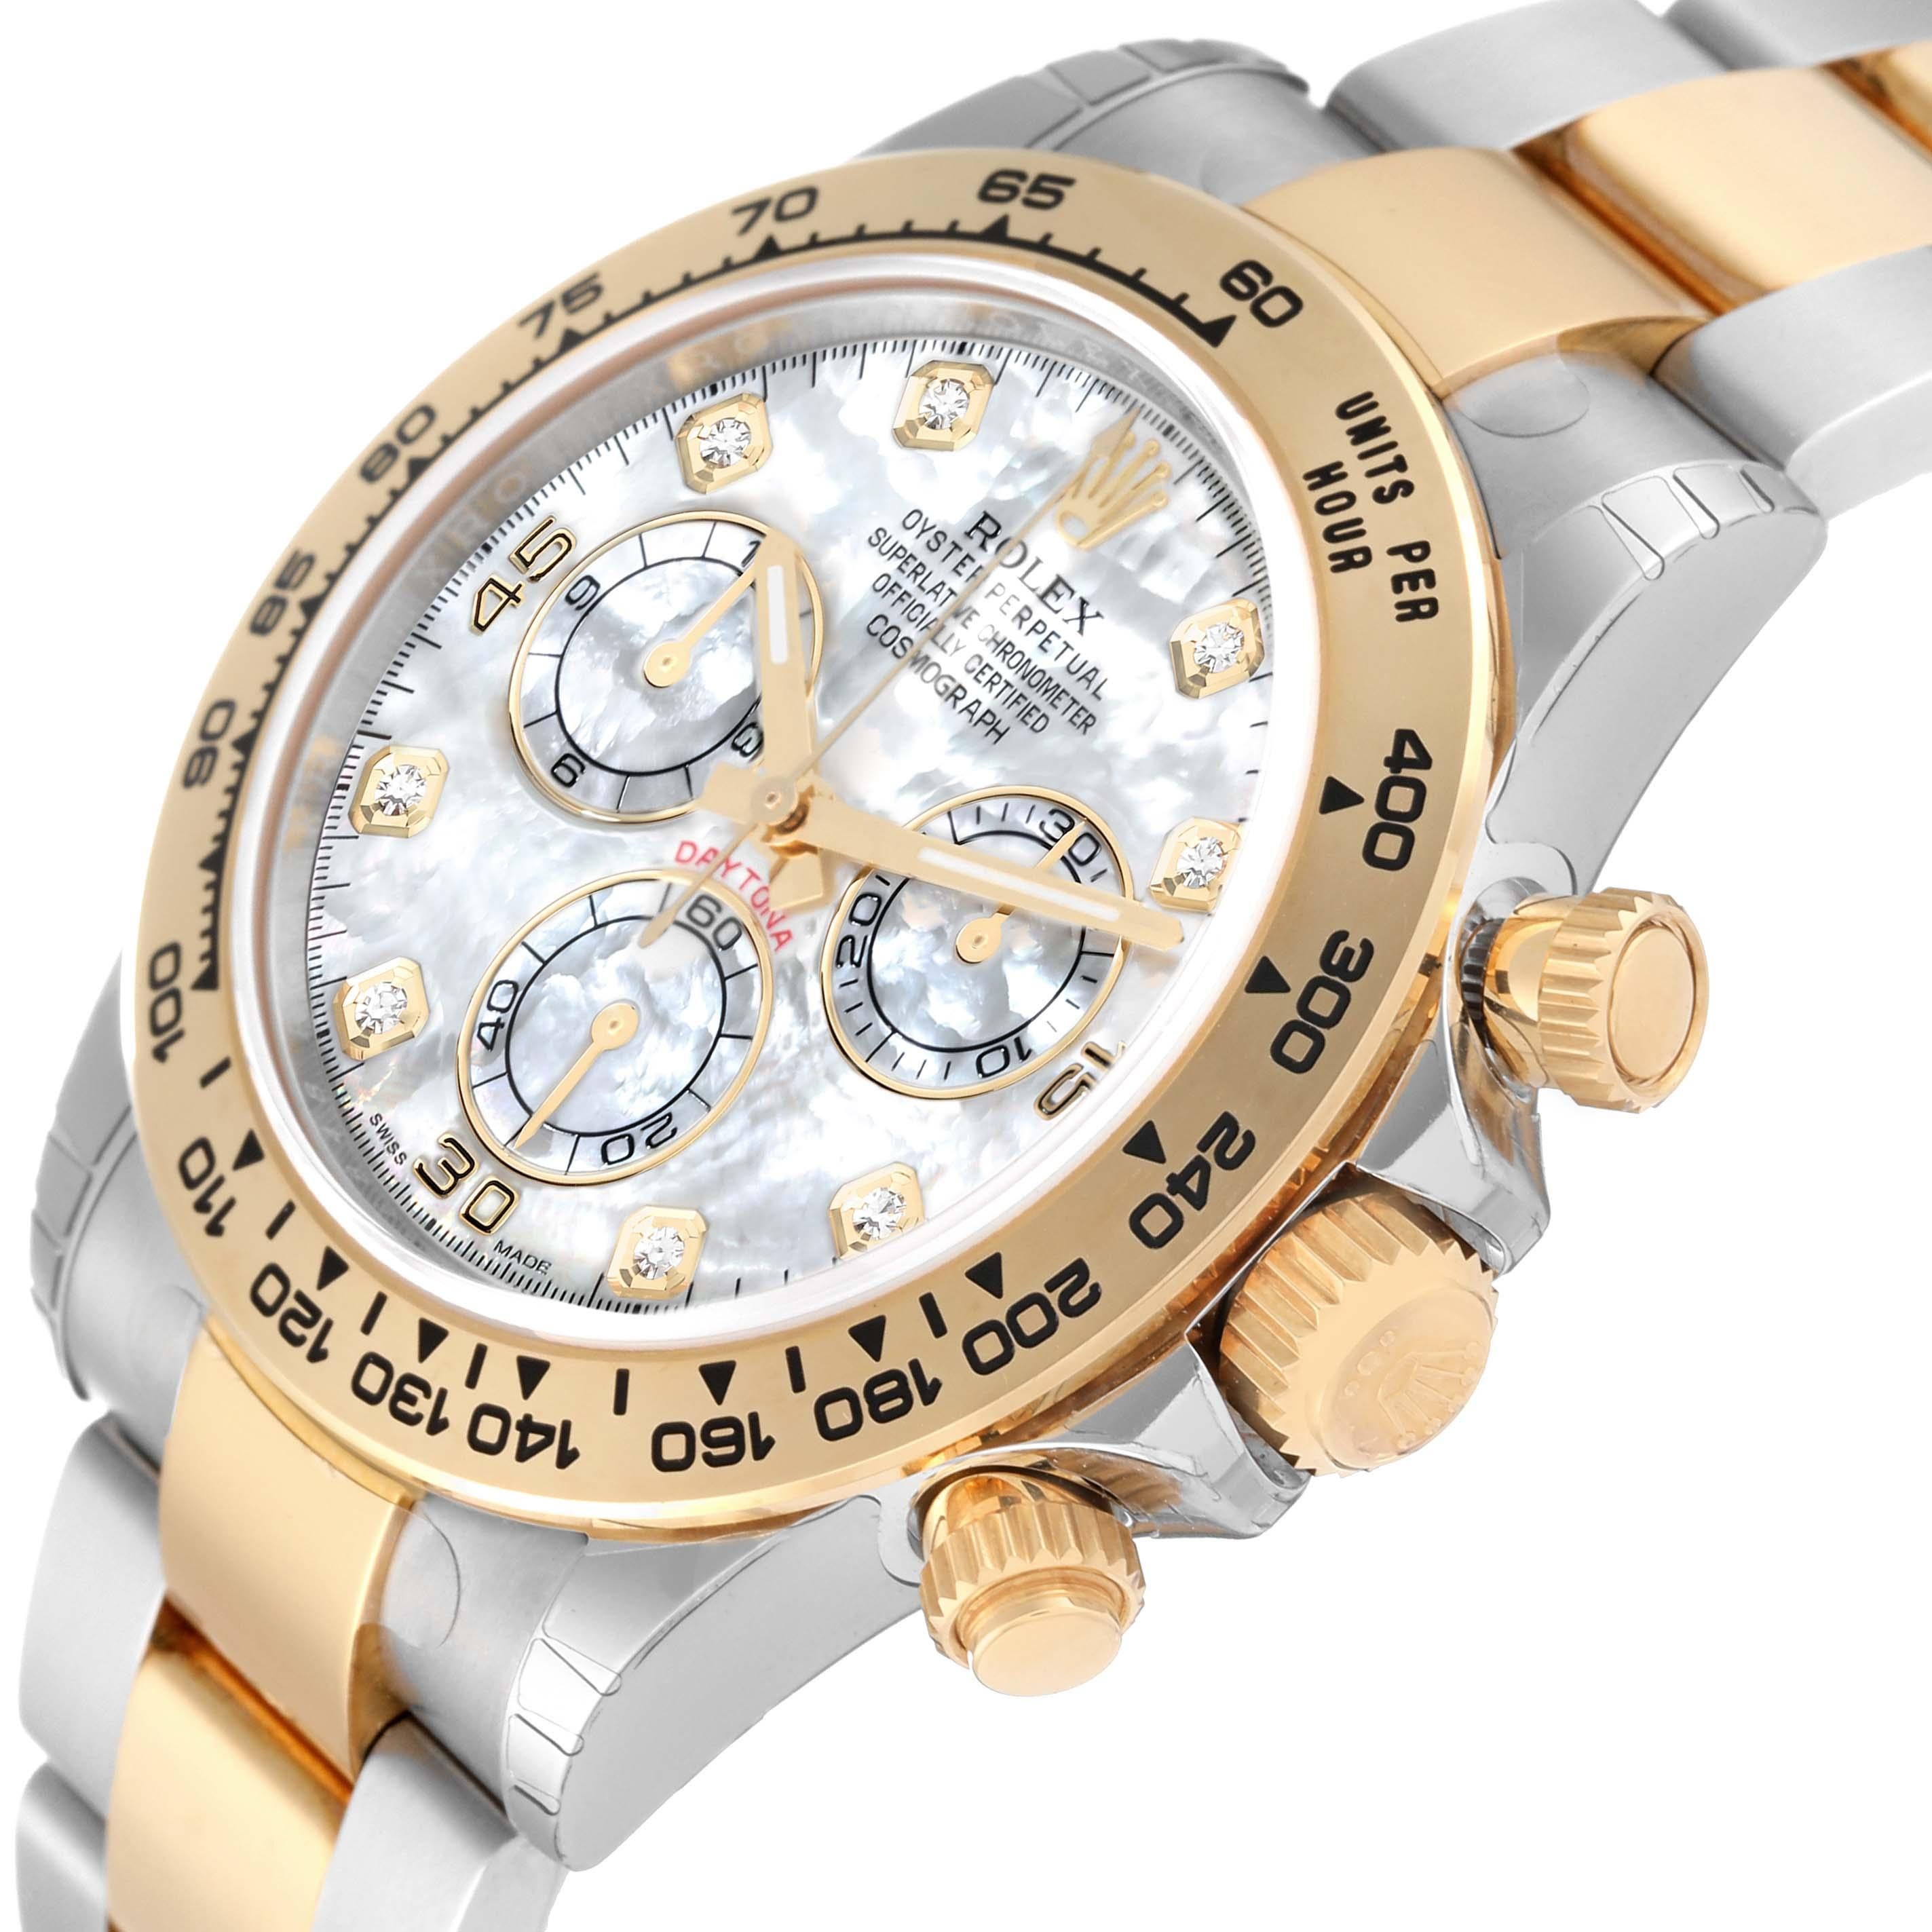 Rolex Daytona Steel Yellow Gold MOP Diamond Mens Watch 116503 Unworn NOS. Officially certified chronometer self-winding movement. Rhodium-plated, oeil-de-perdrix decoration, straight line lever escapement, monometallic balance adjusted to 5